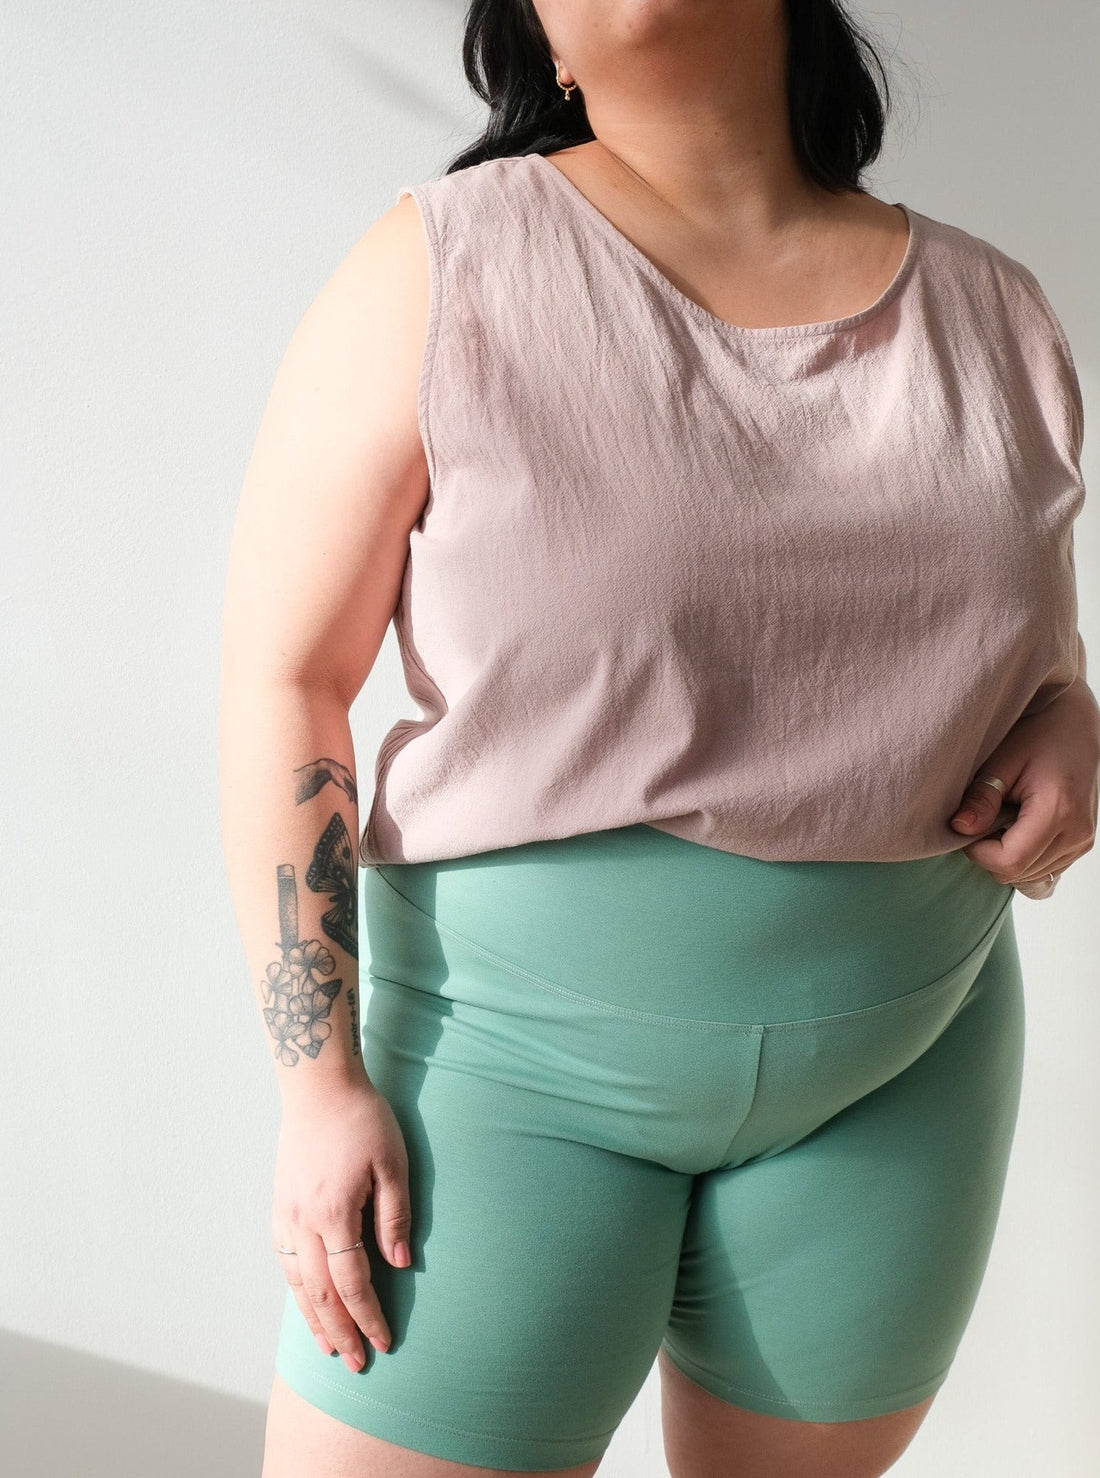 Booty shorts for women  Buy organic cotton women's underwear